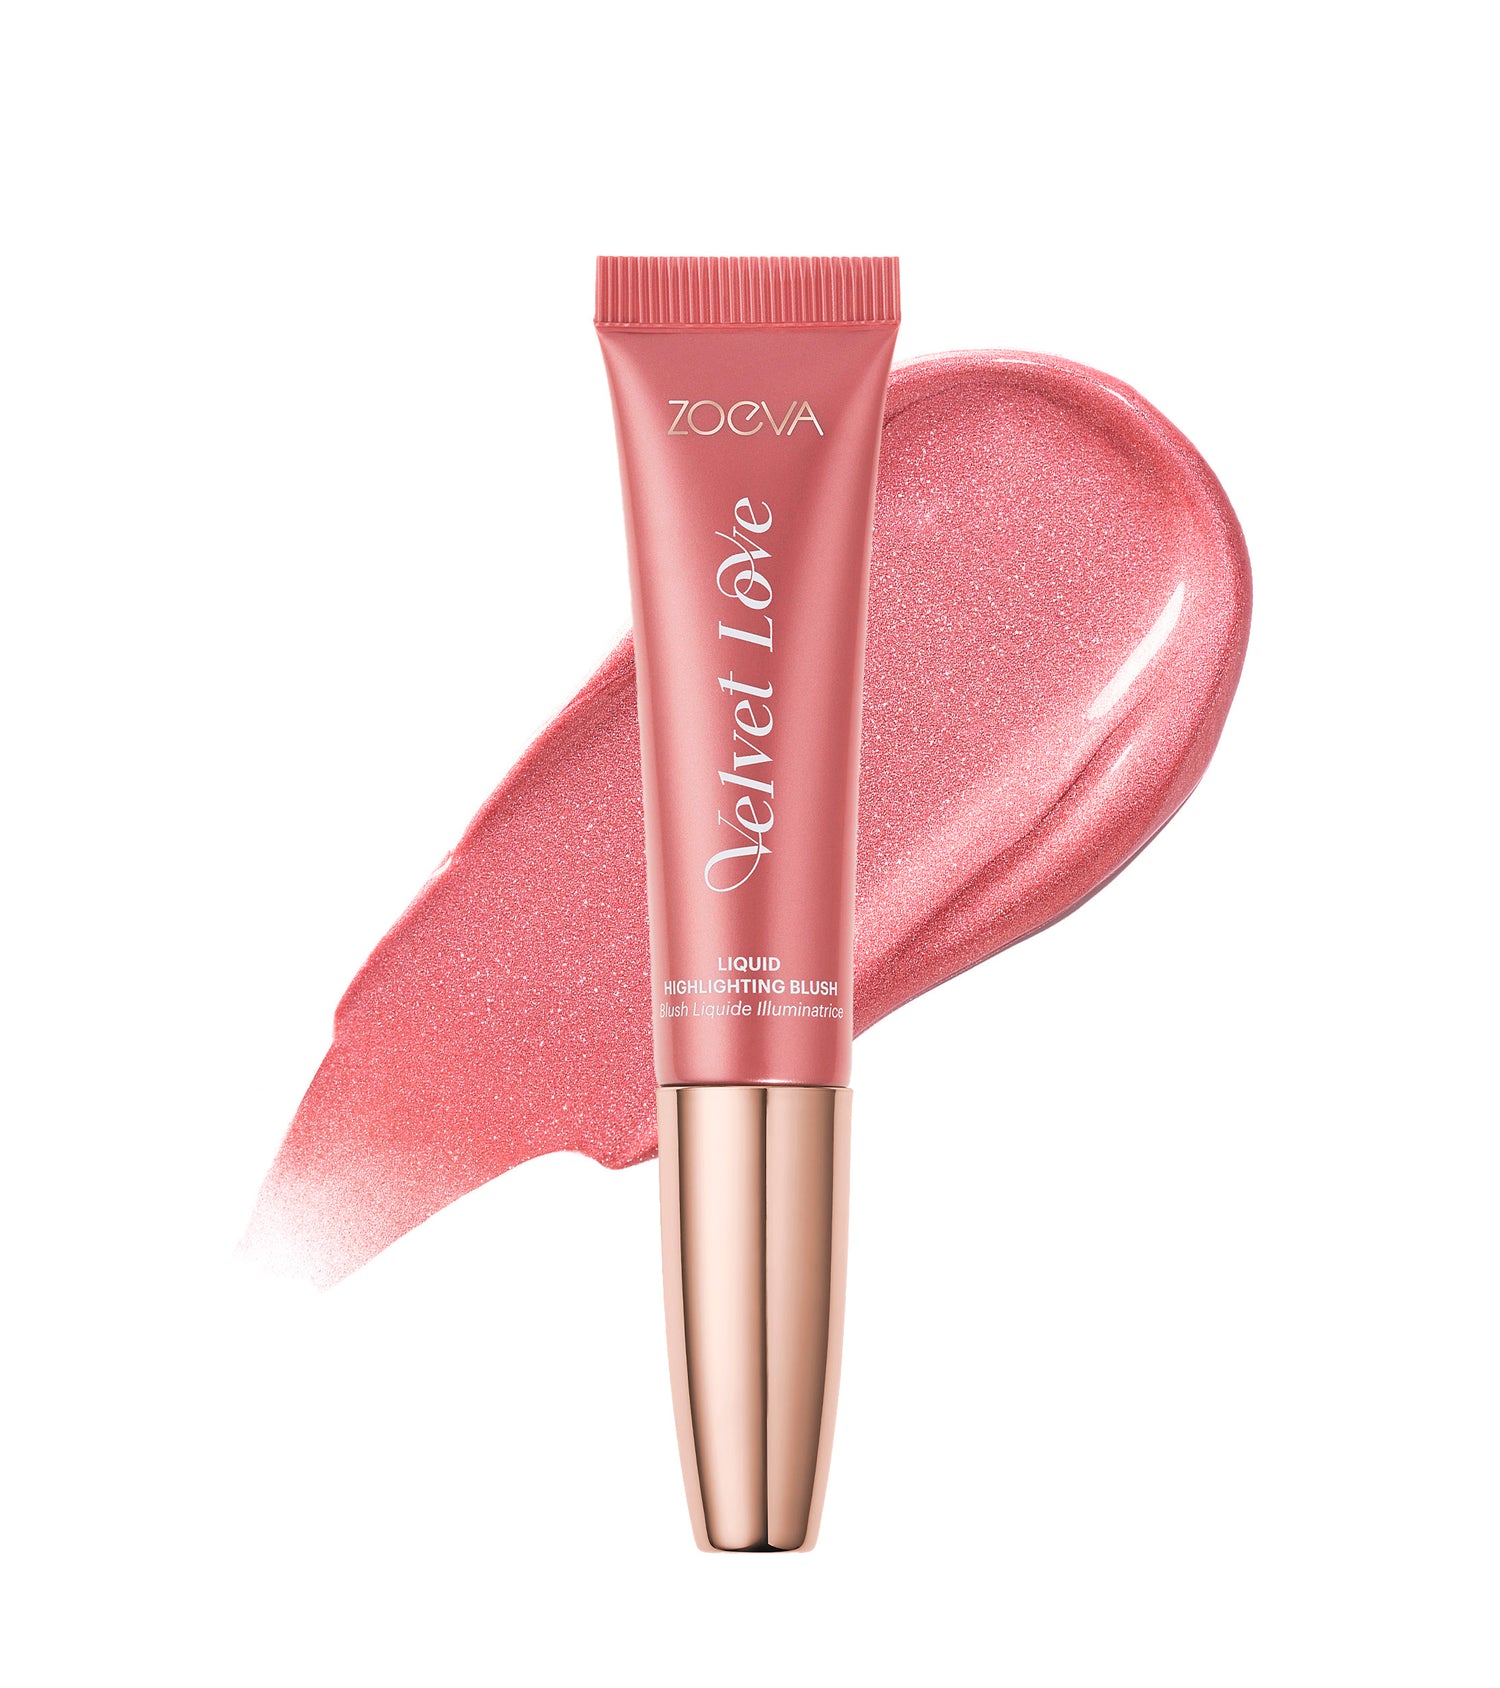 Velvet Love Liquid Highlighting Blush (Pink Nectar) Main Image featured